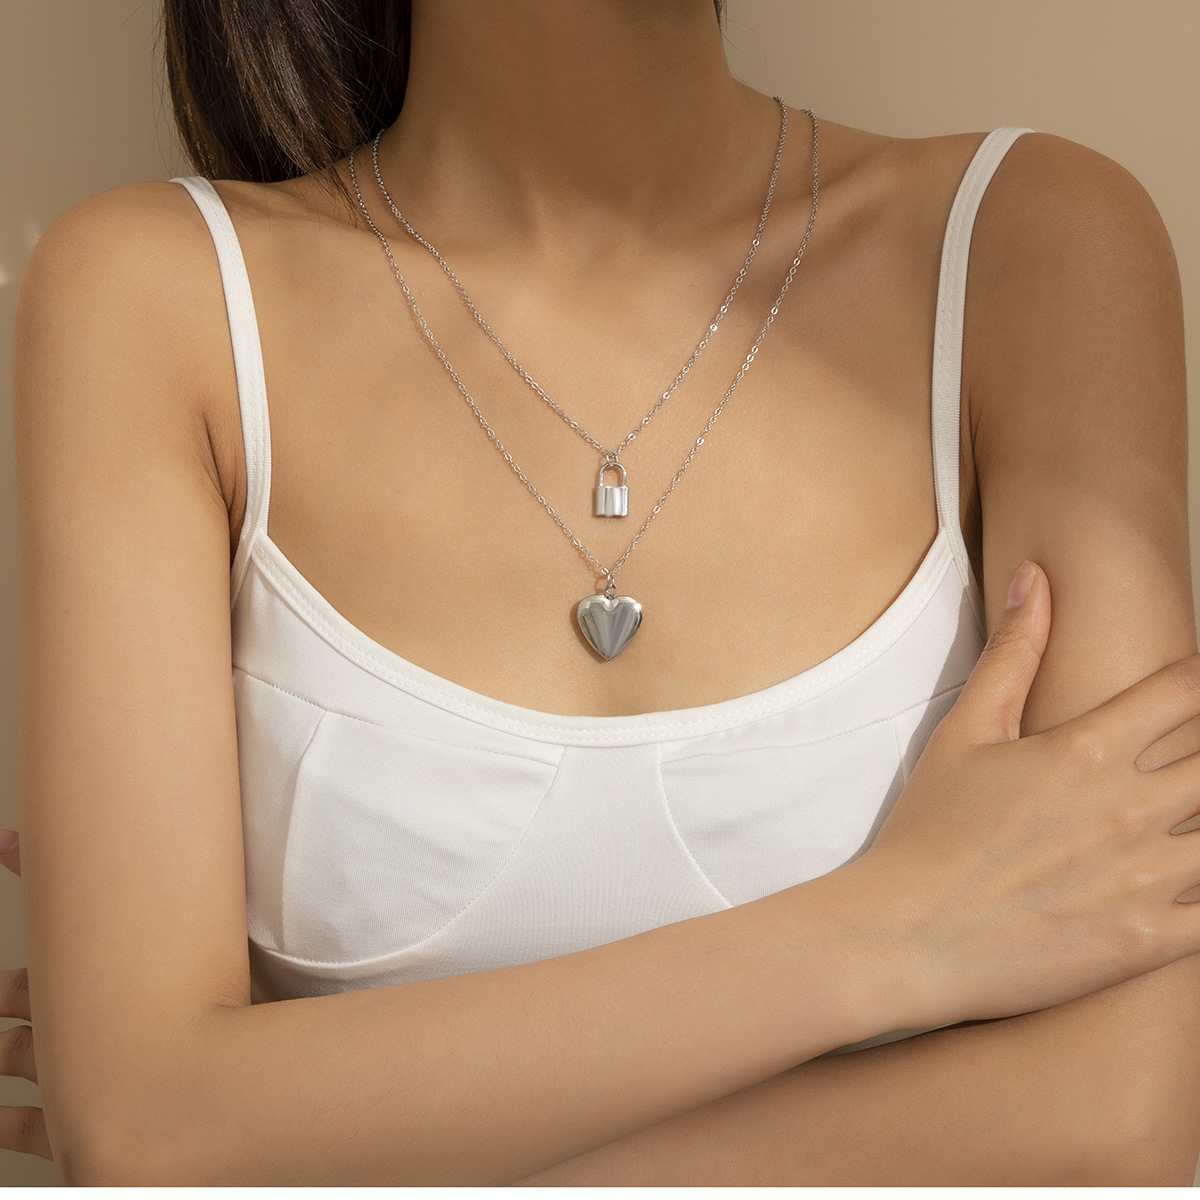 0944 Layered Necklace Heart Bean Disc Long Chain Lock Pendant Choker for Women Adjustable